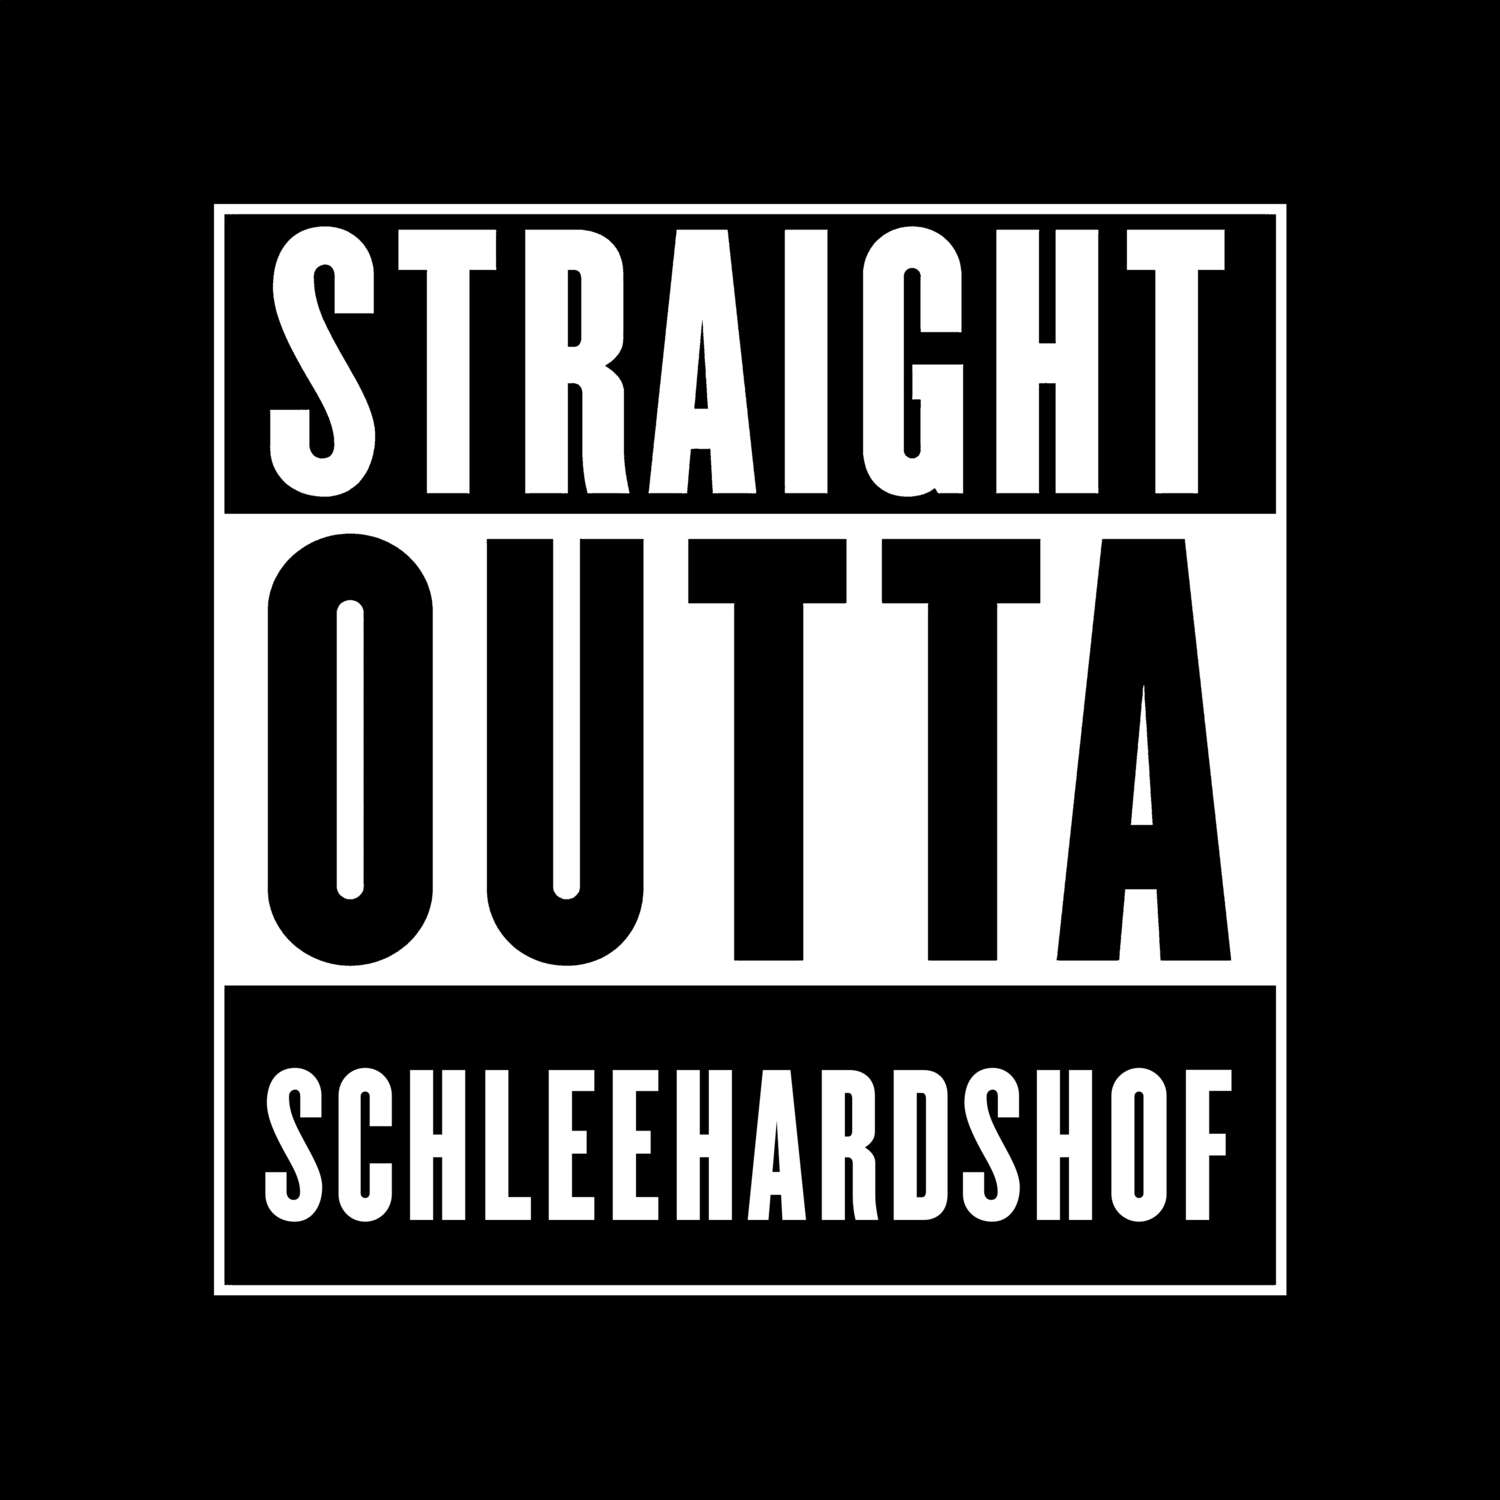 Schleehardshof T-Shirt »Straight Outta«